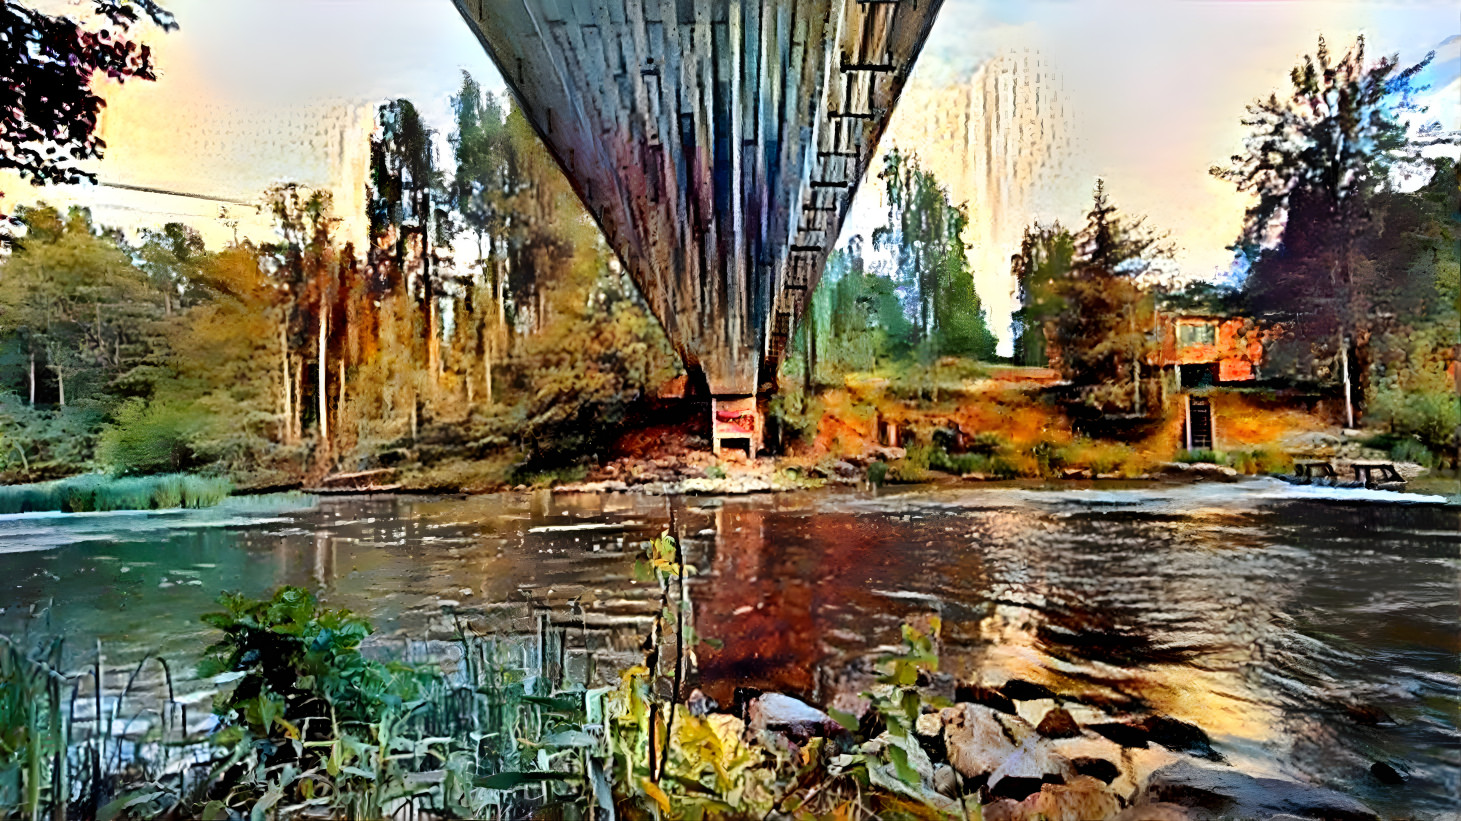 Bridge over rapids